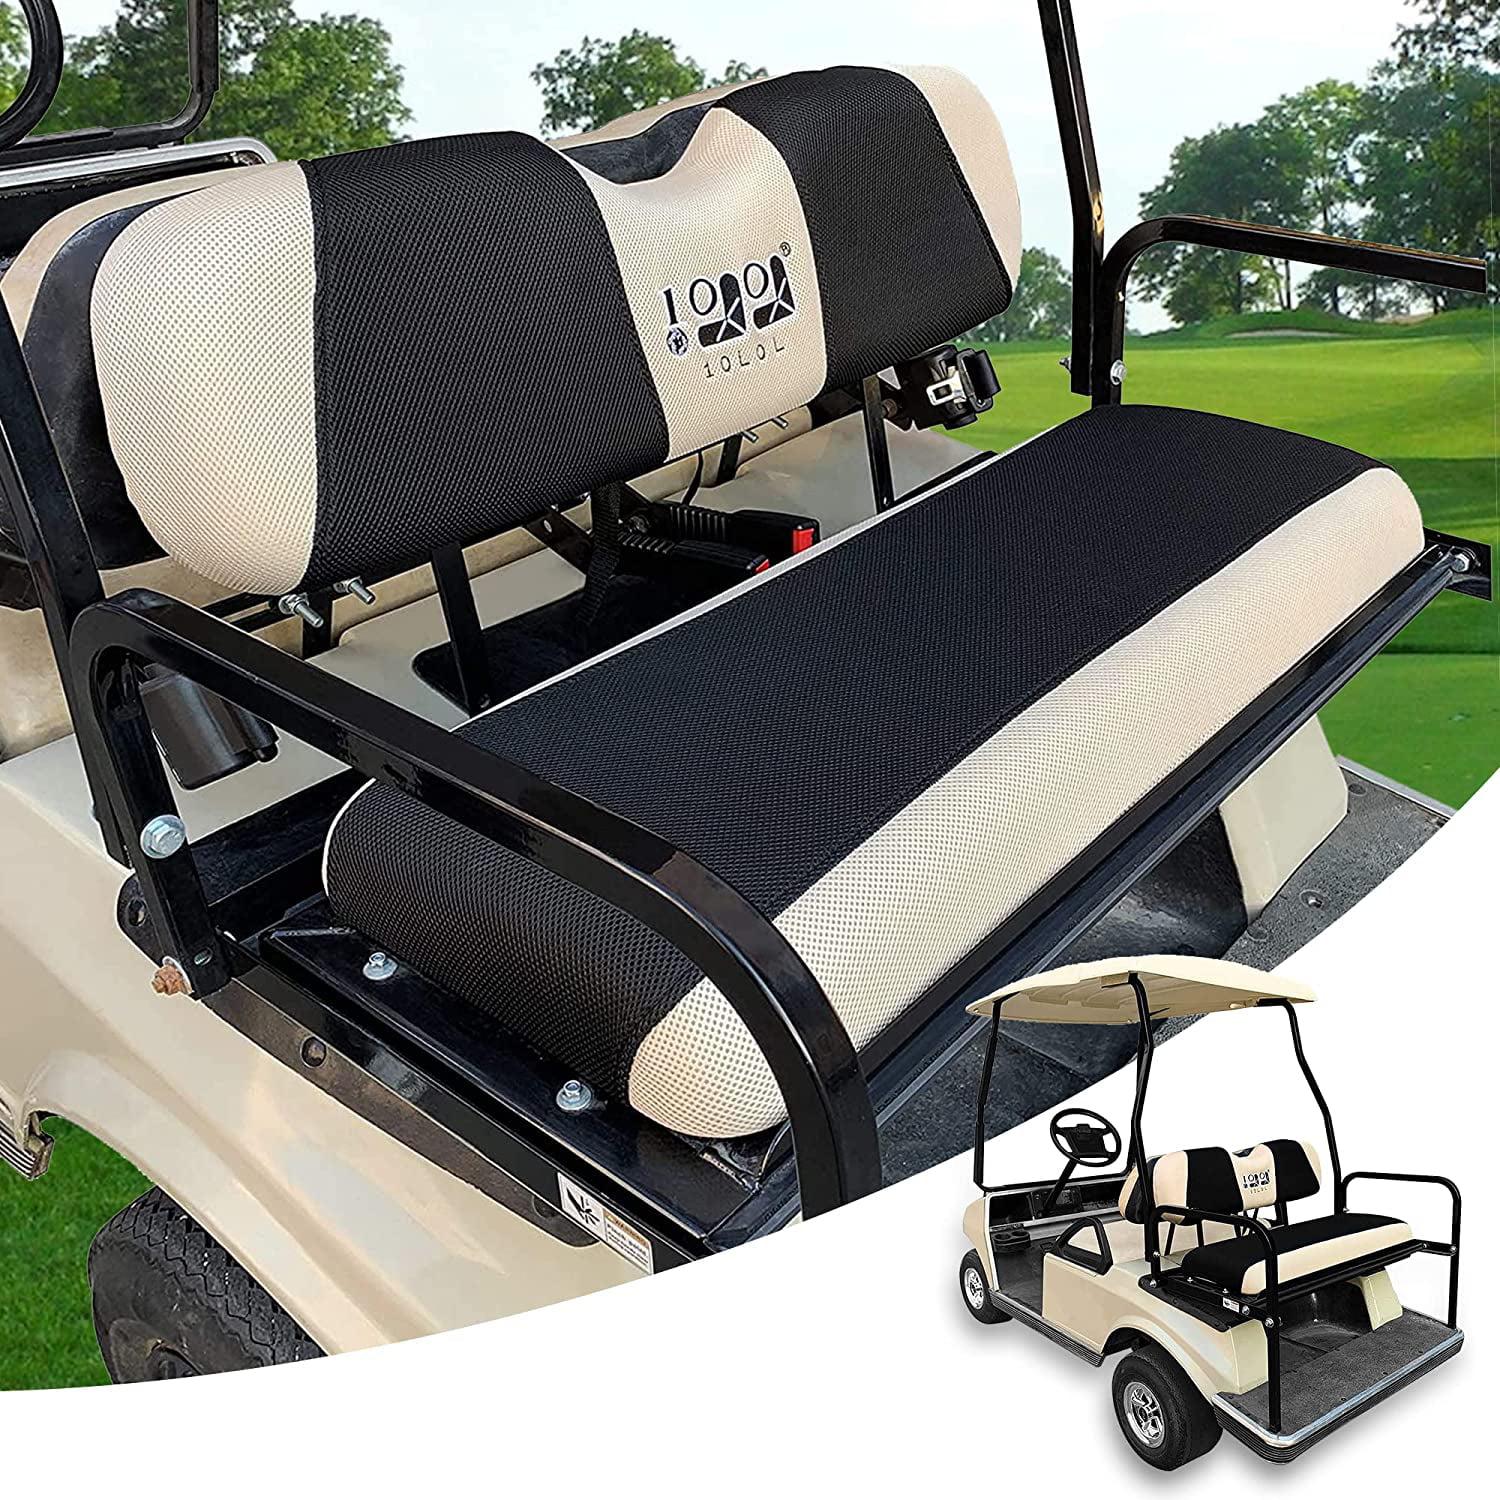 10L0L Golf Cart Seat Cover Fits EZGO Club Car Precedent Rear Seat Golf Cart Accessories- Black Beige - Walmart.com